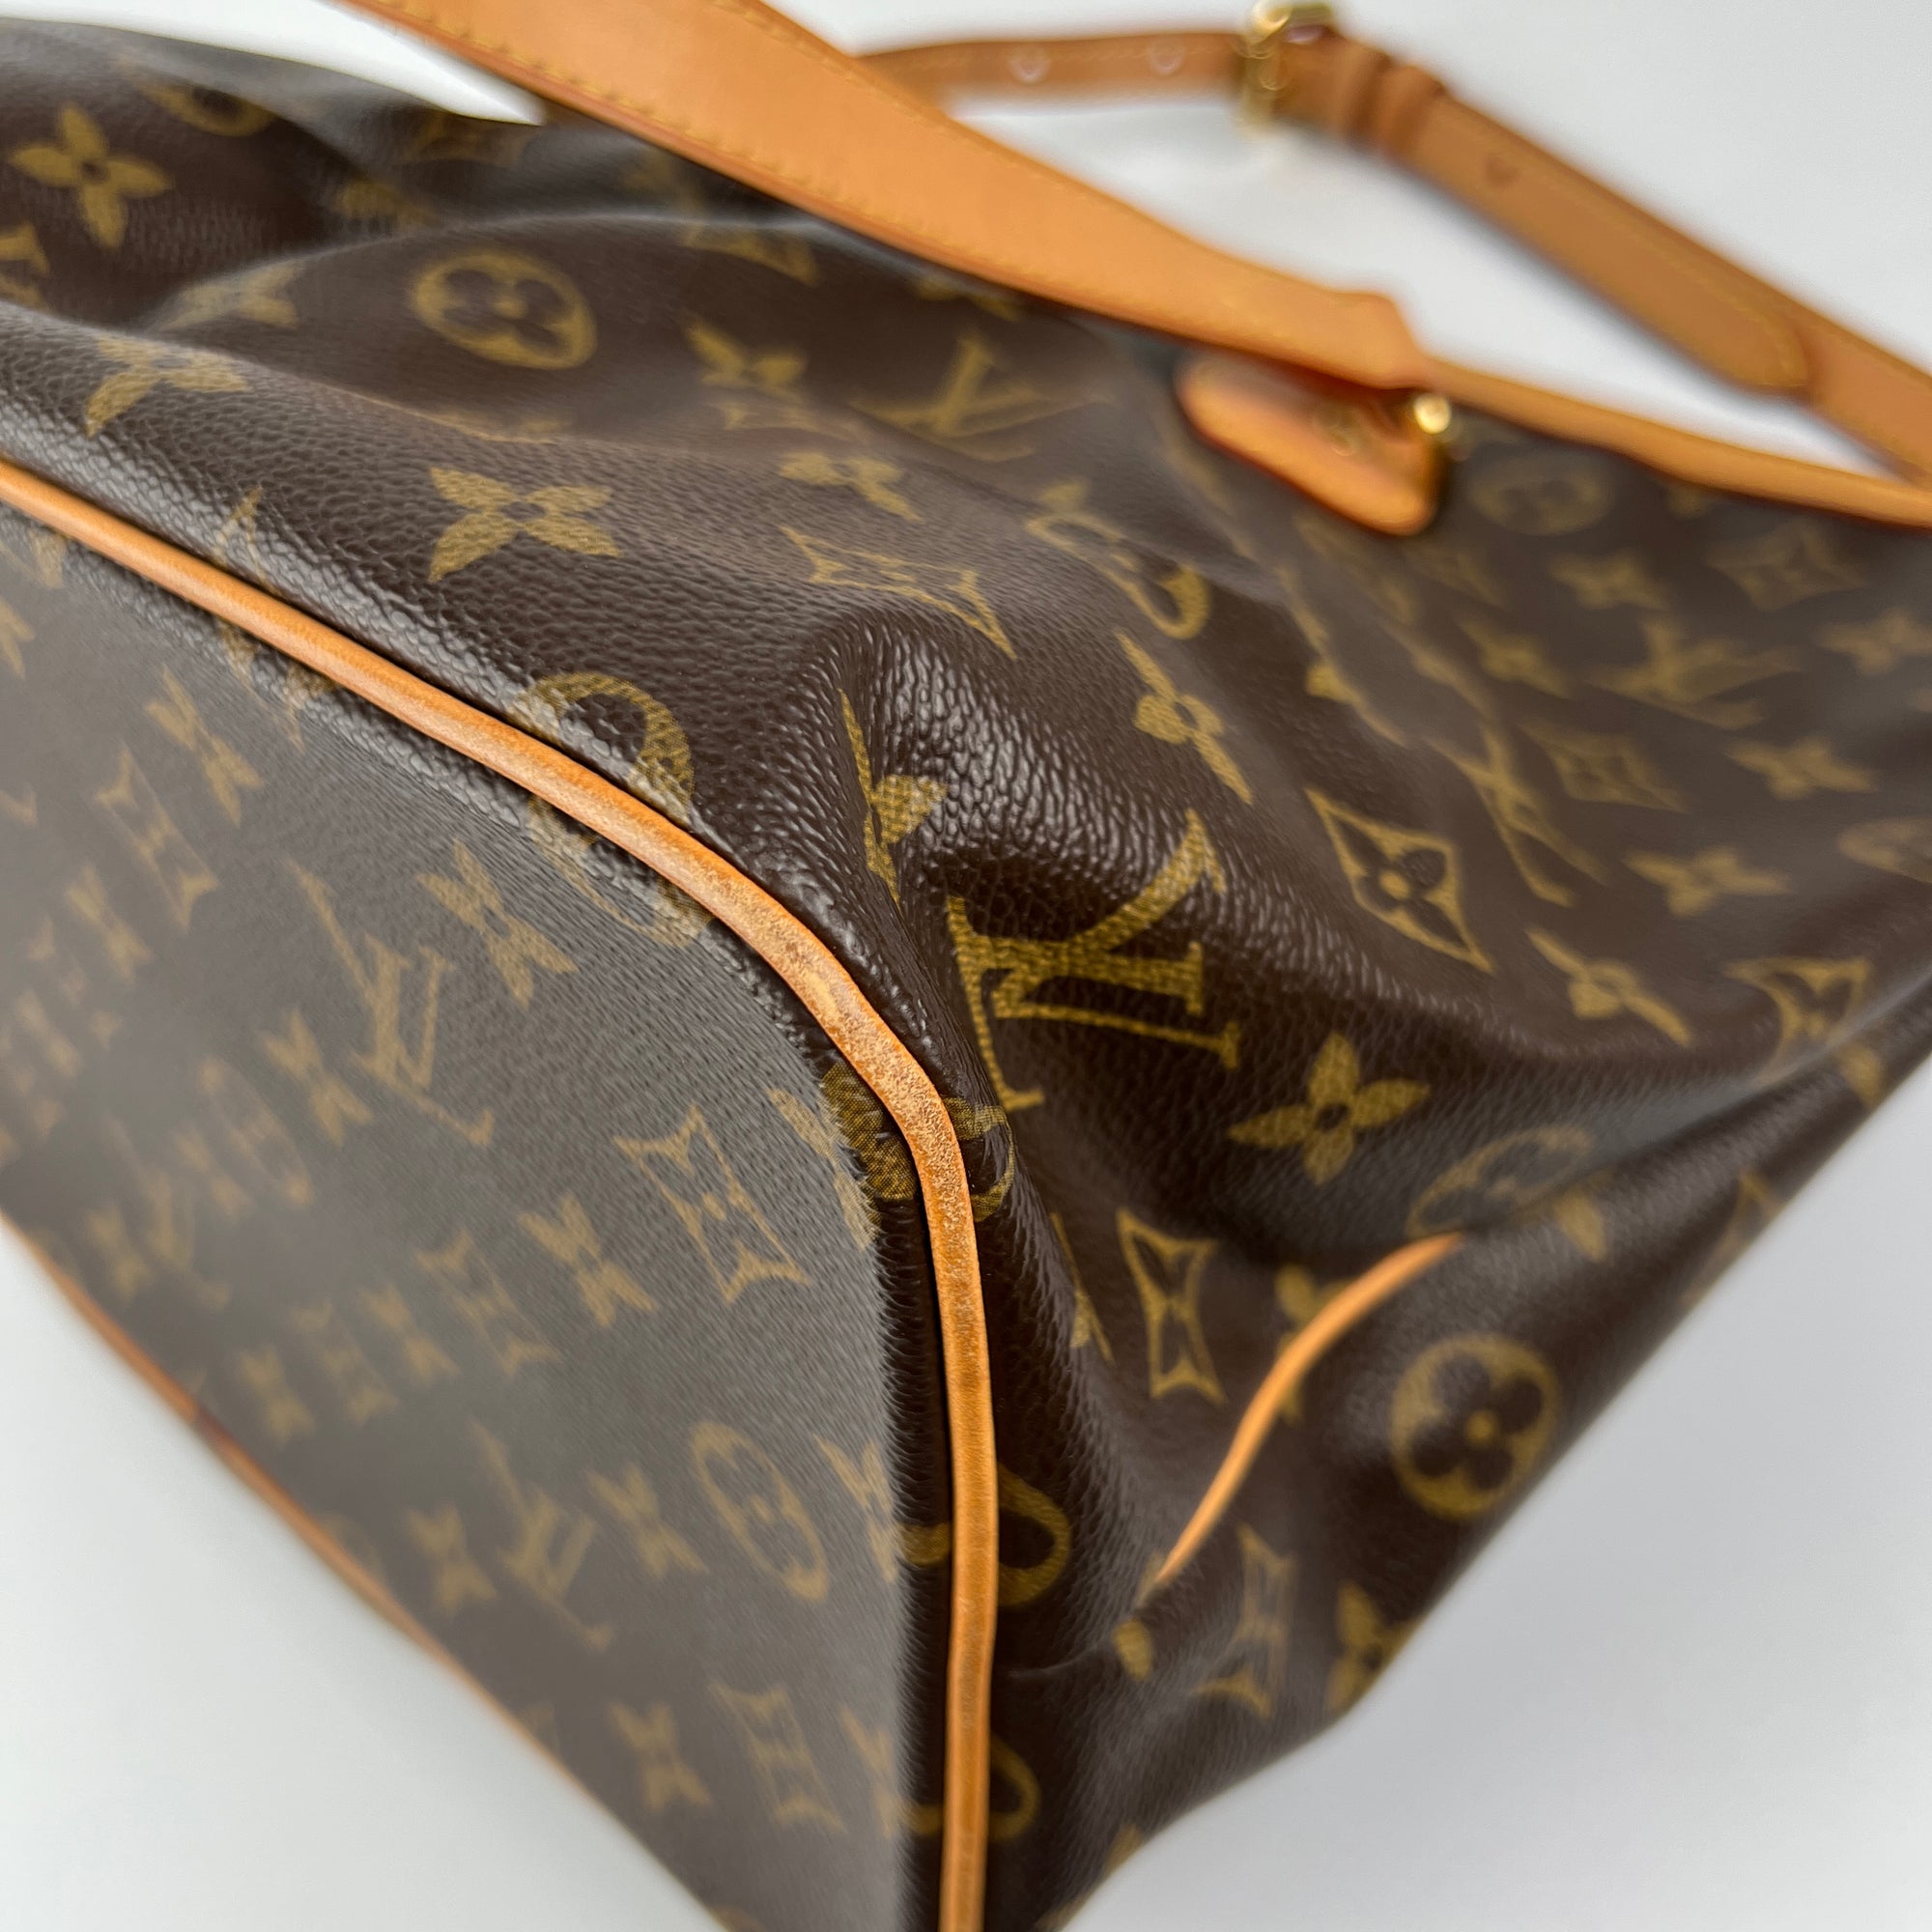 Ambiance Luxury LV Monogram Palermo PM Handbag